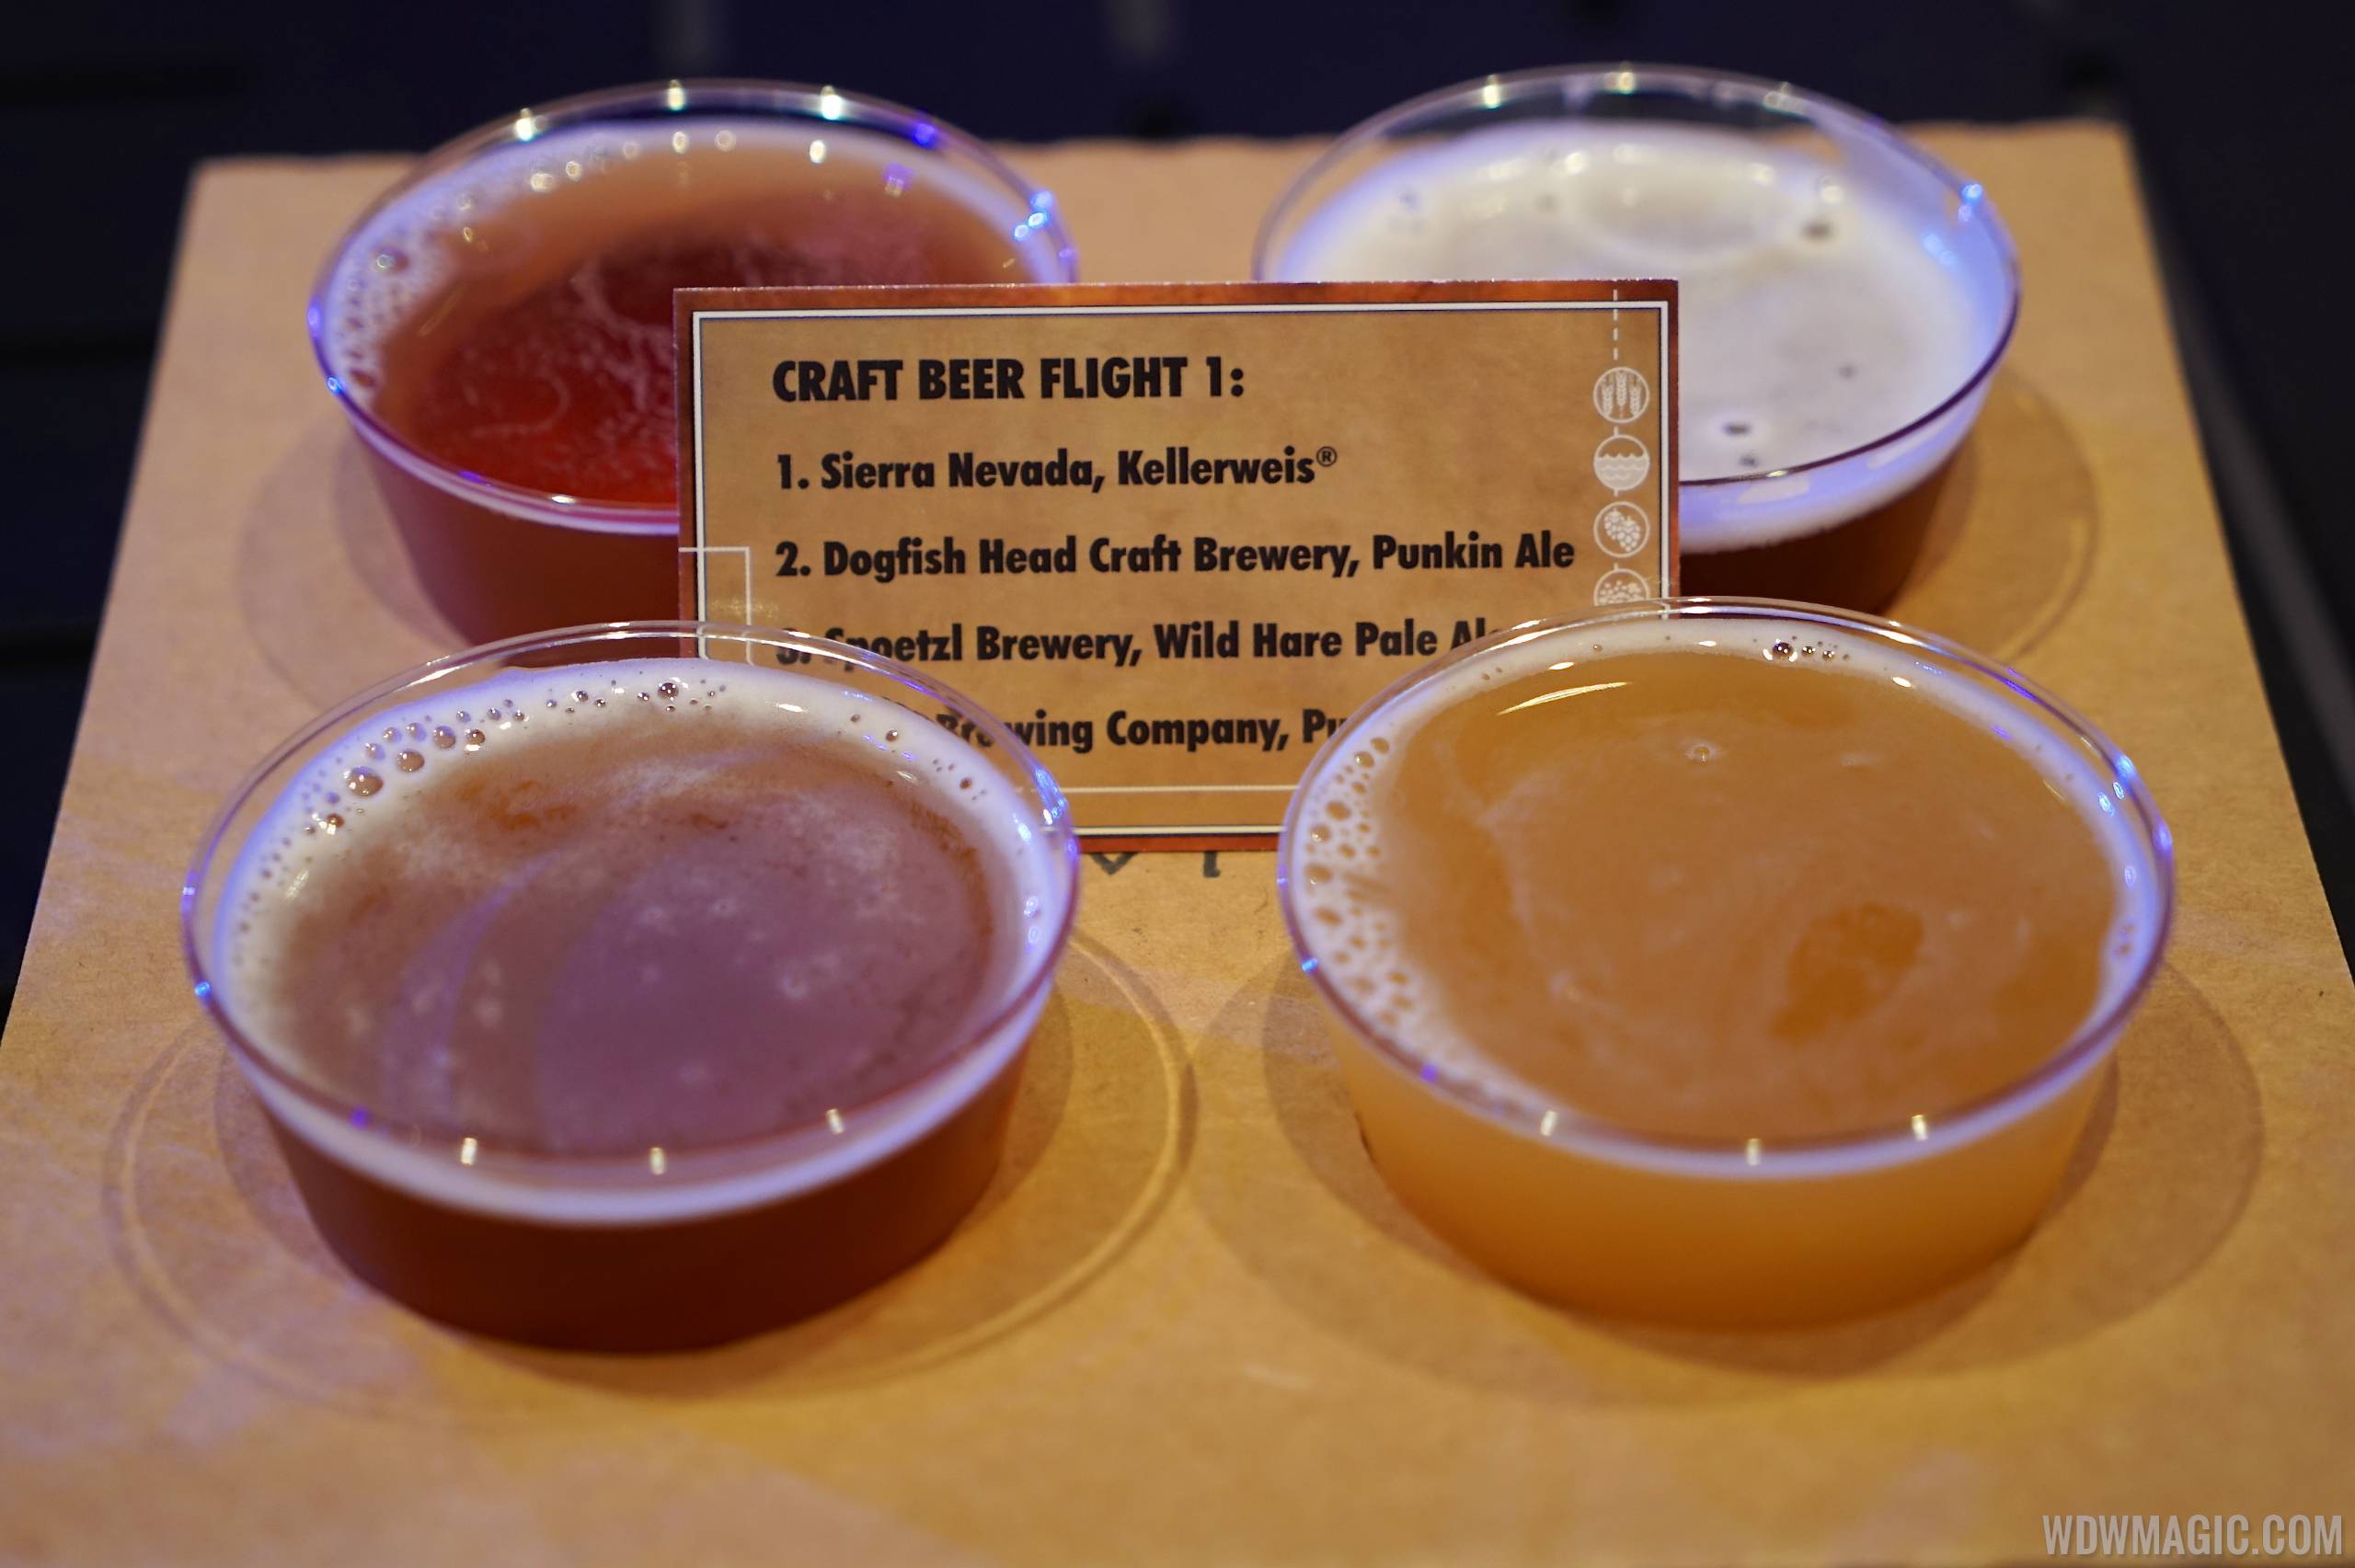 Craft Beer flight